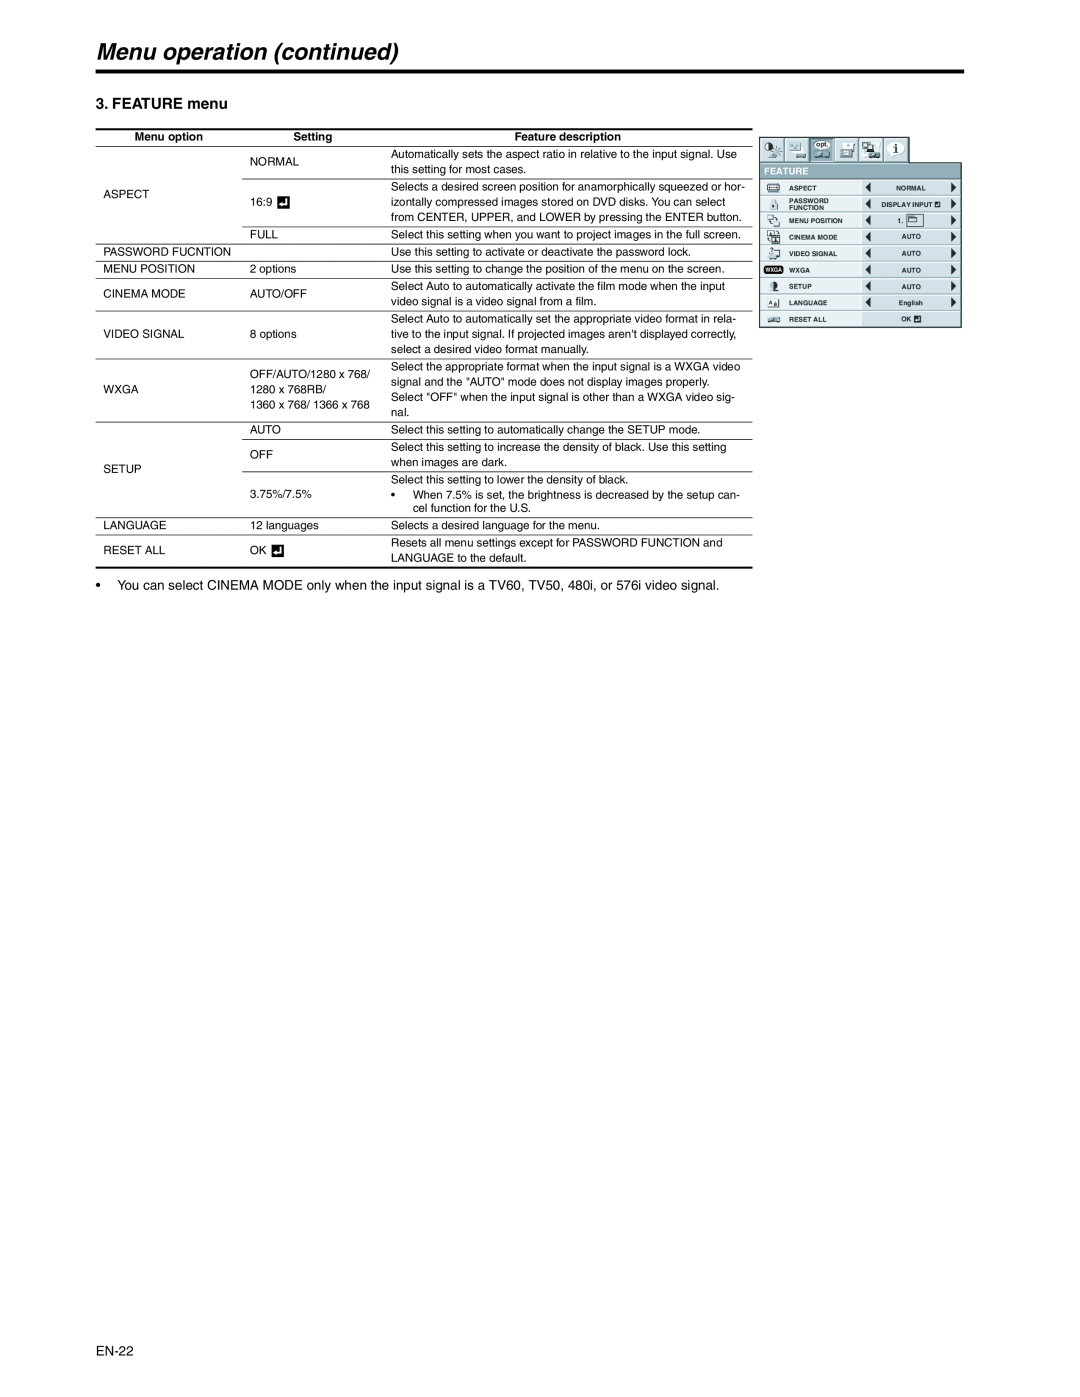 Mitsubishi Electronics XD250U-ST user manual FEATURE menu, Menu operation continued, EN-22 